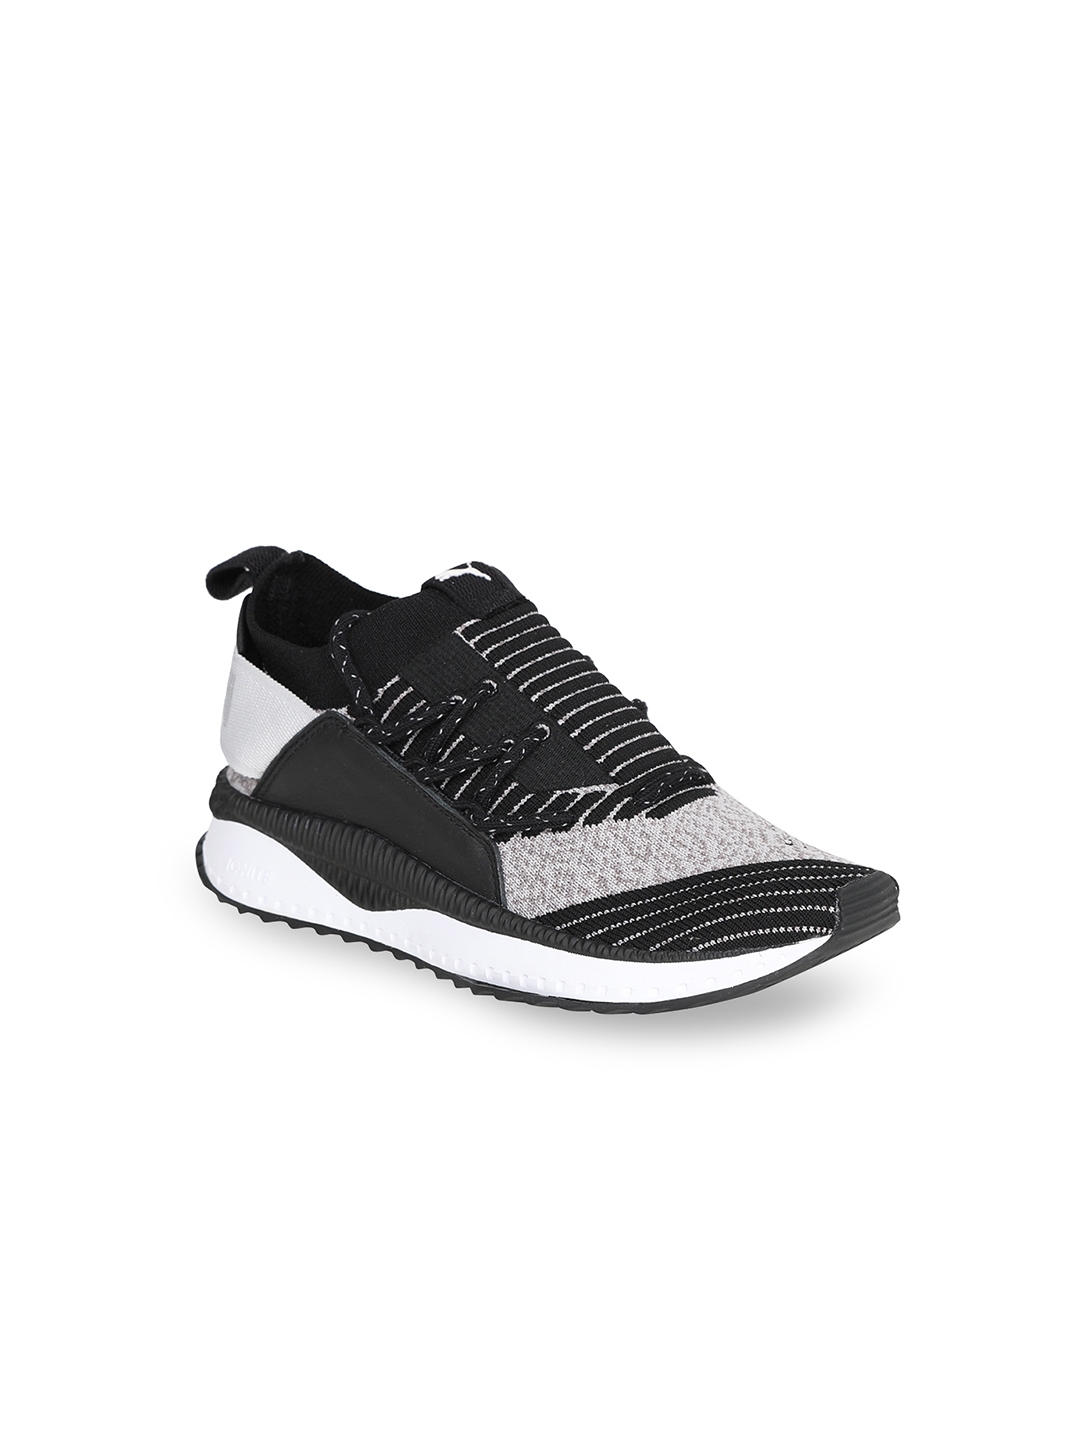 puma unisex grey sneakers